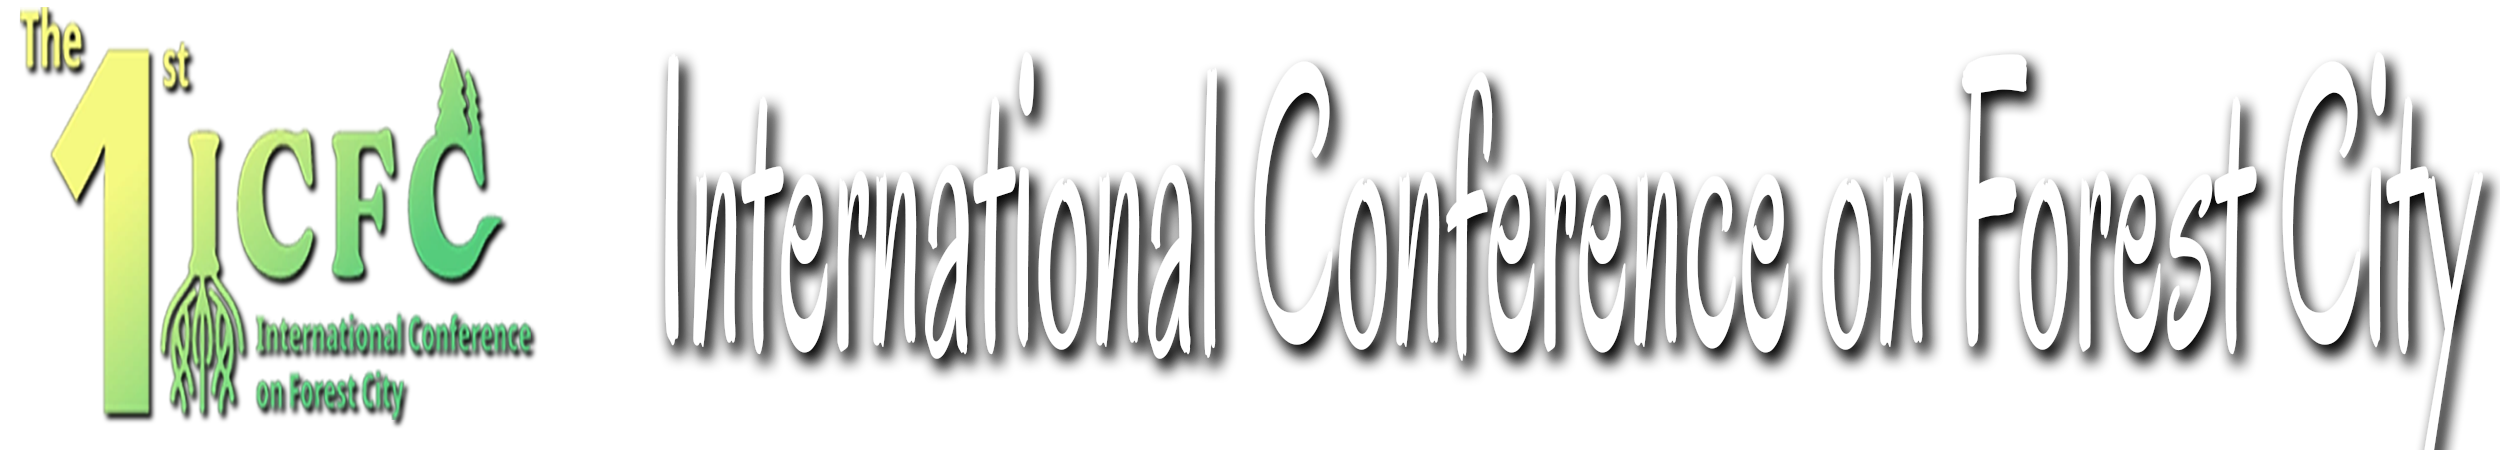 ICFC Logo